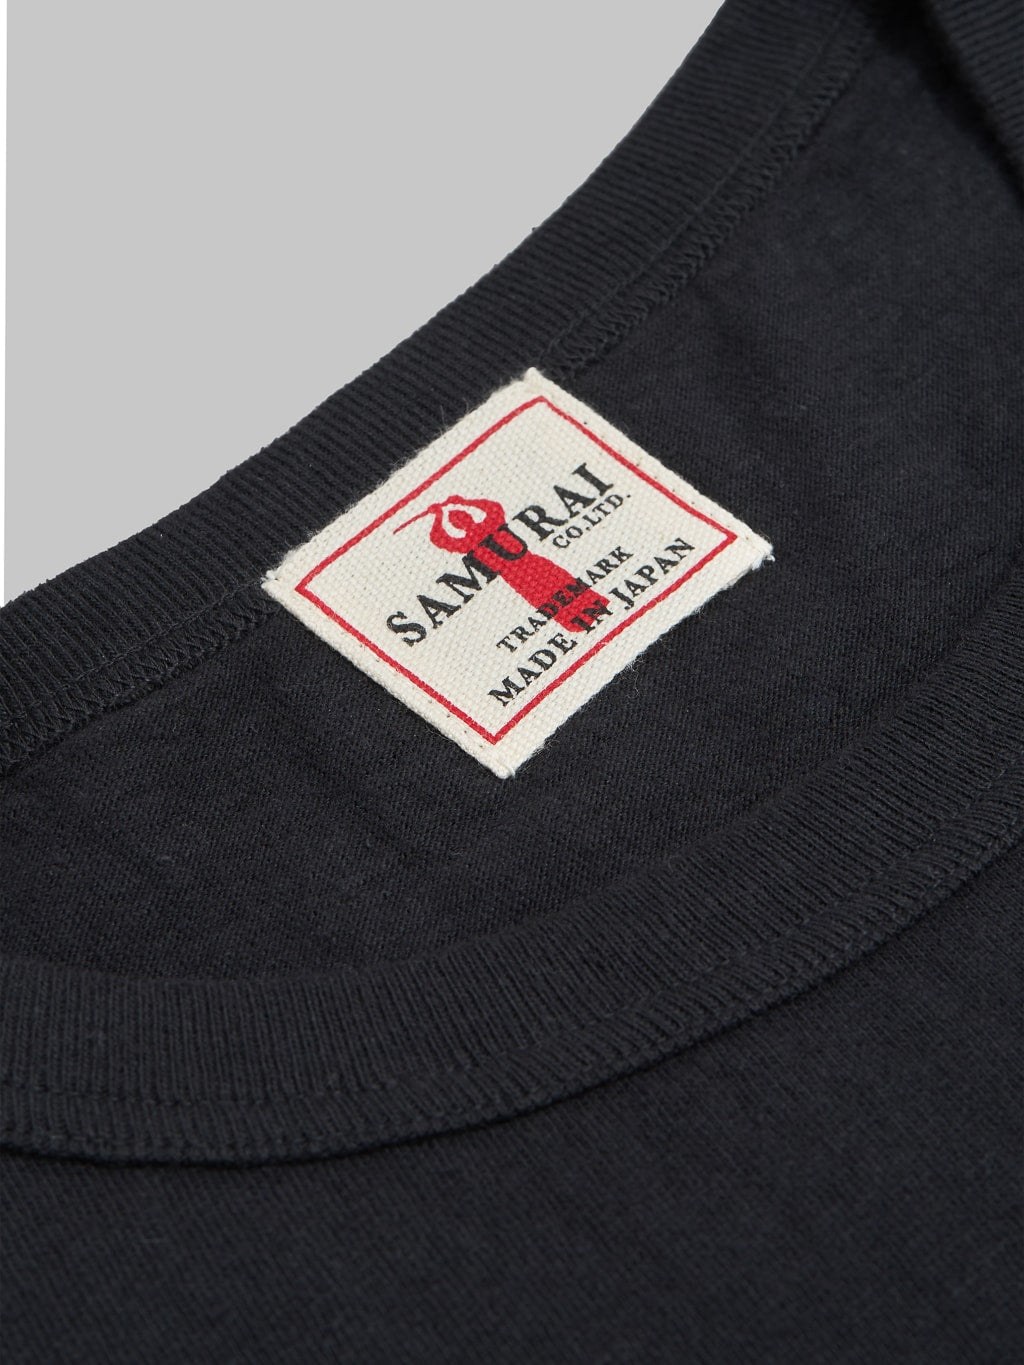 Samurai jeans crew neck tubular tshirt black brand label